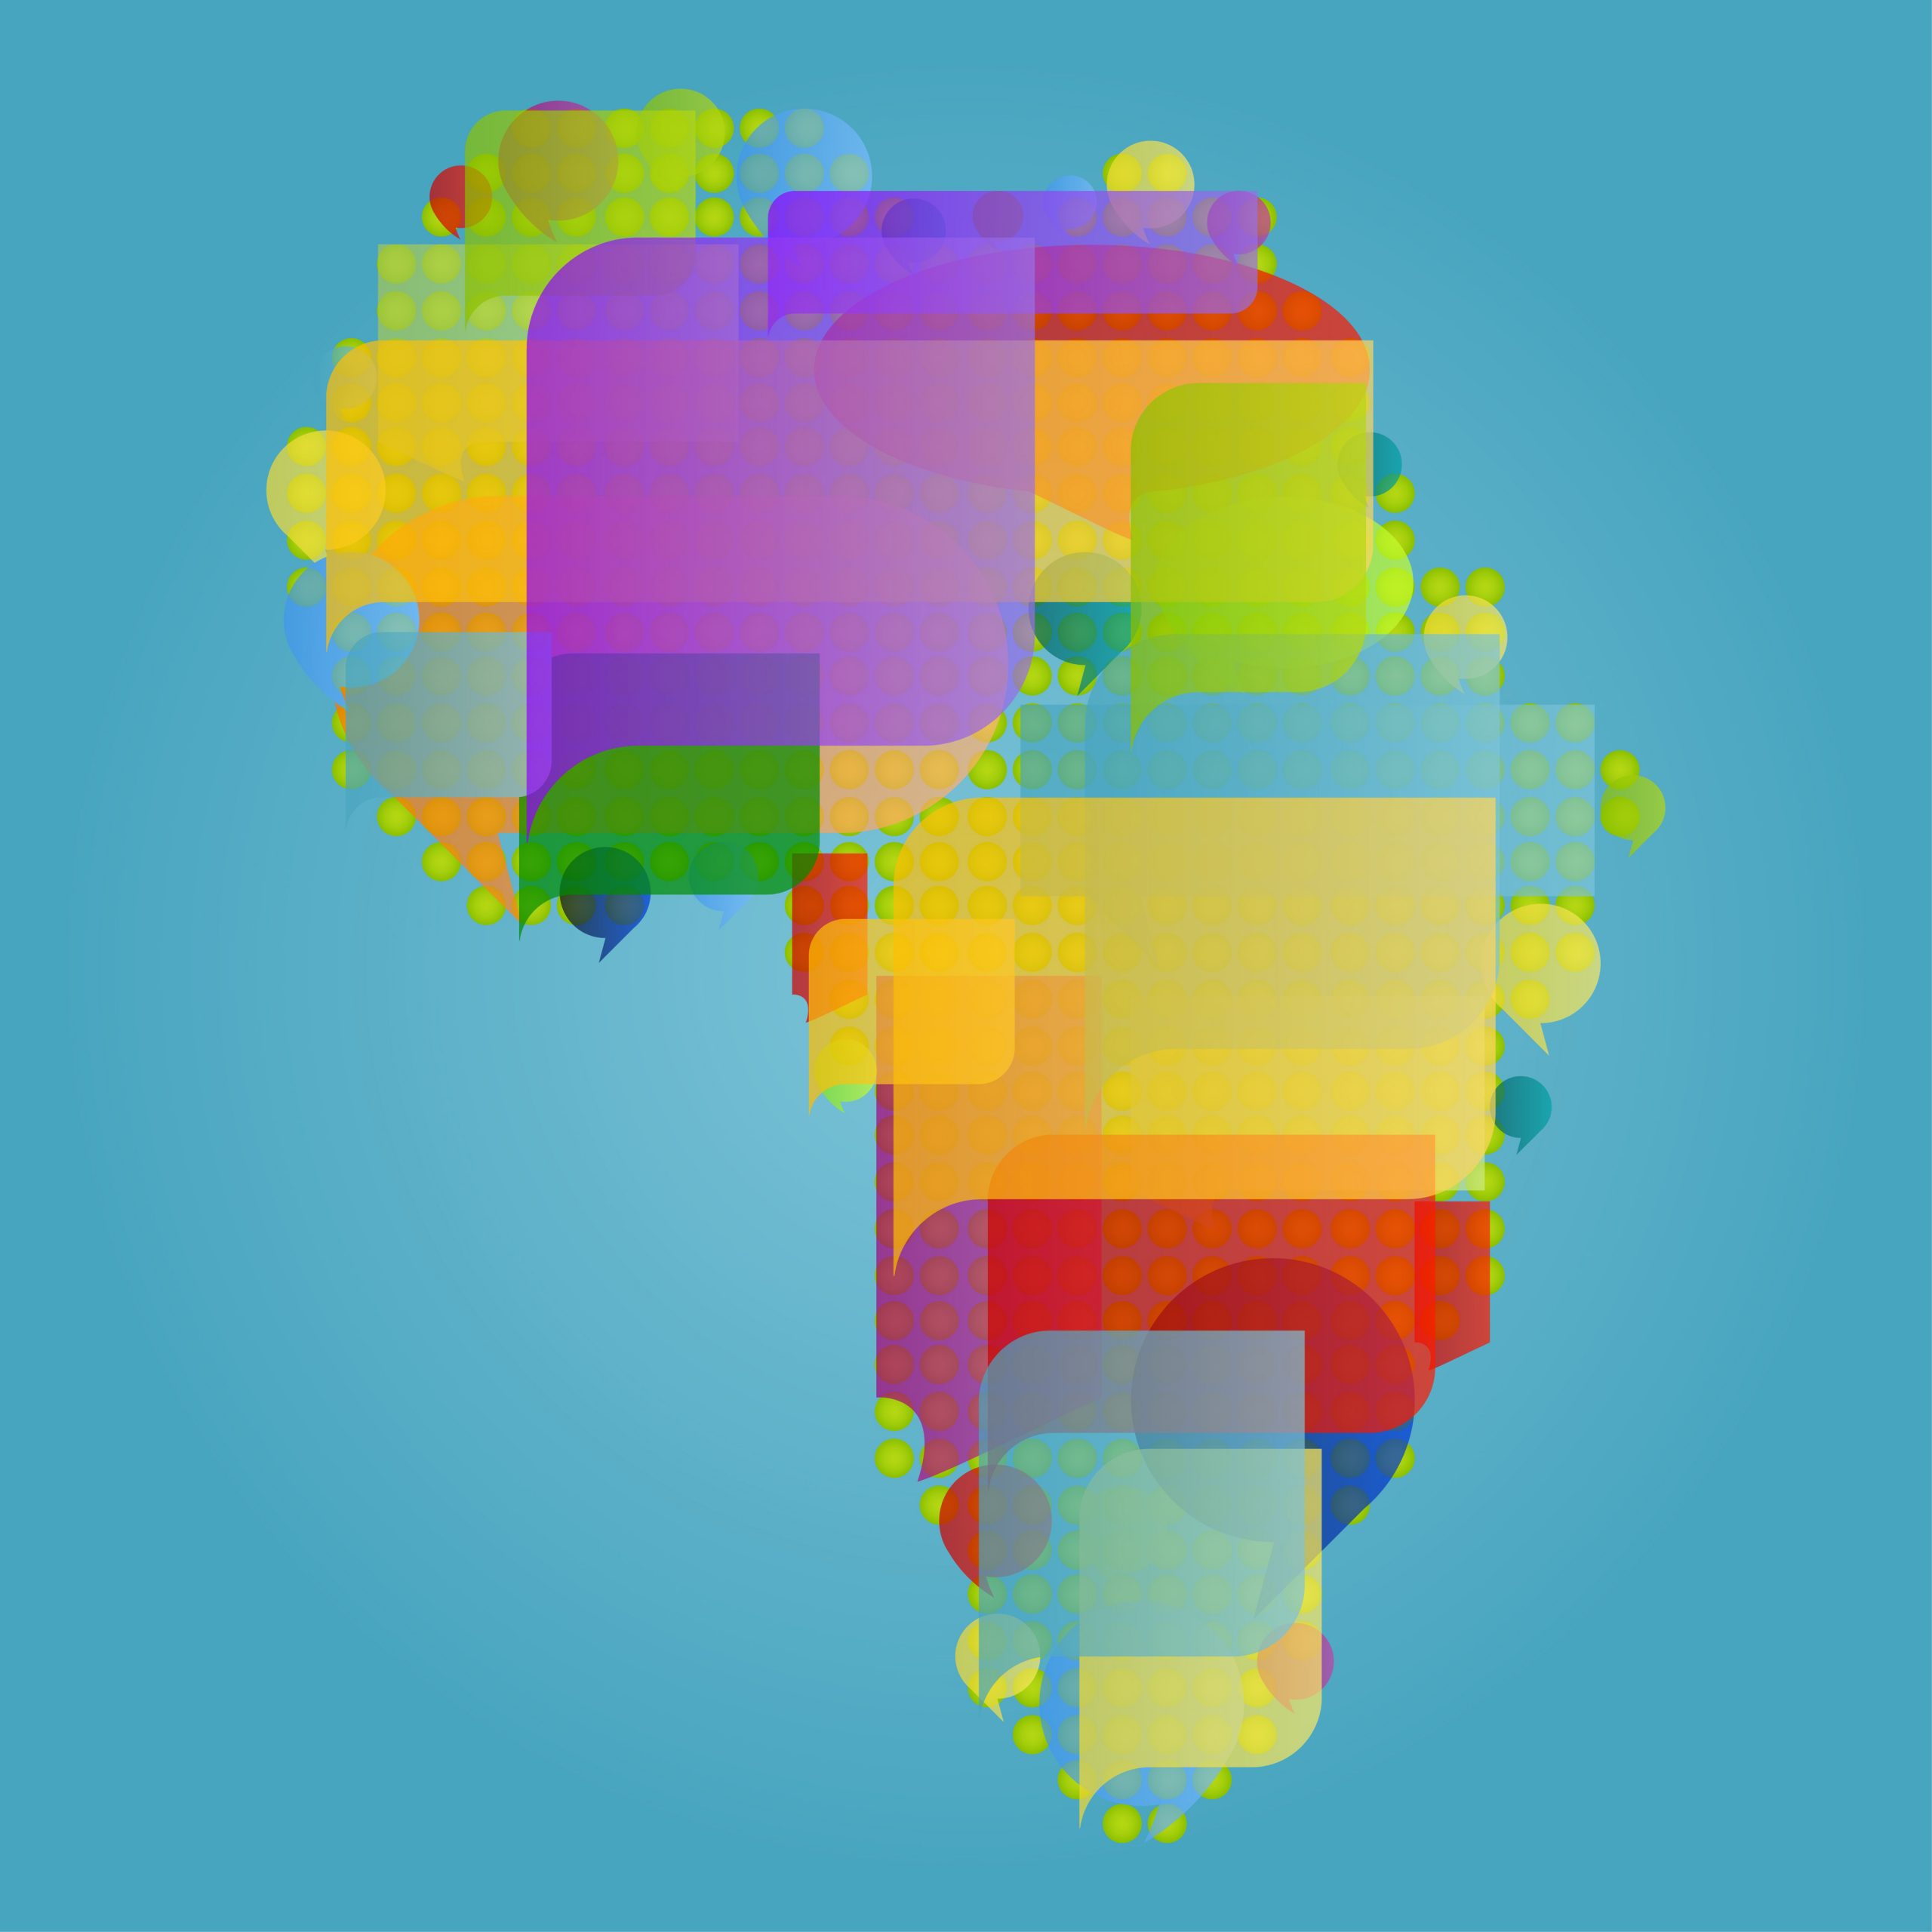 https://depositphotos.com/14784975/stock-illustration-africa-continent-world-map-made.html